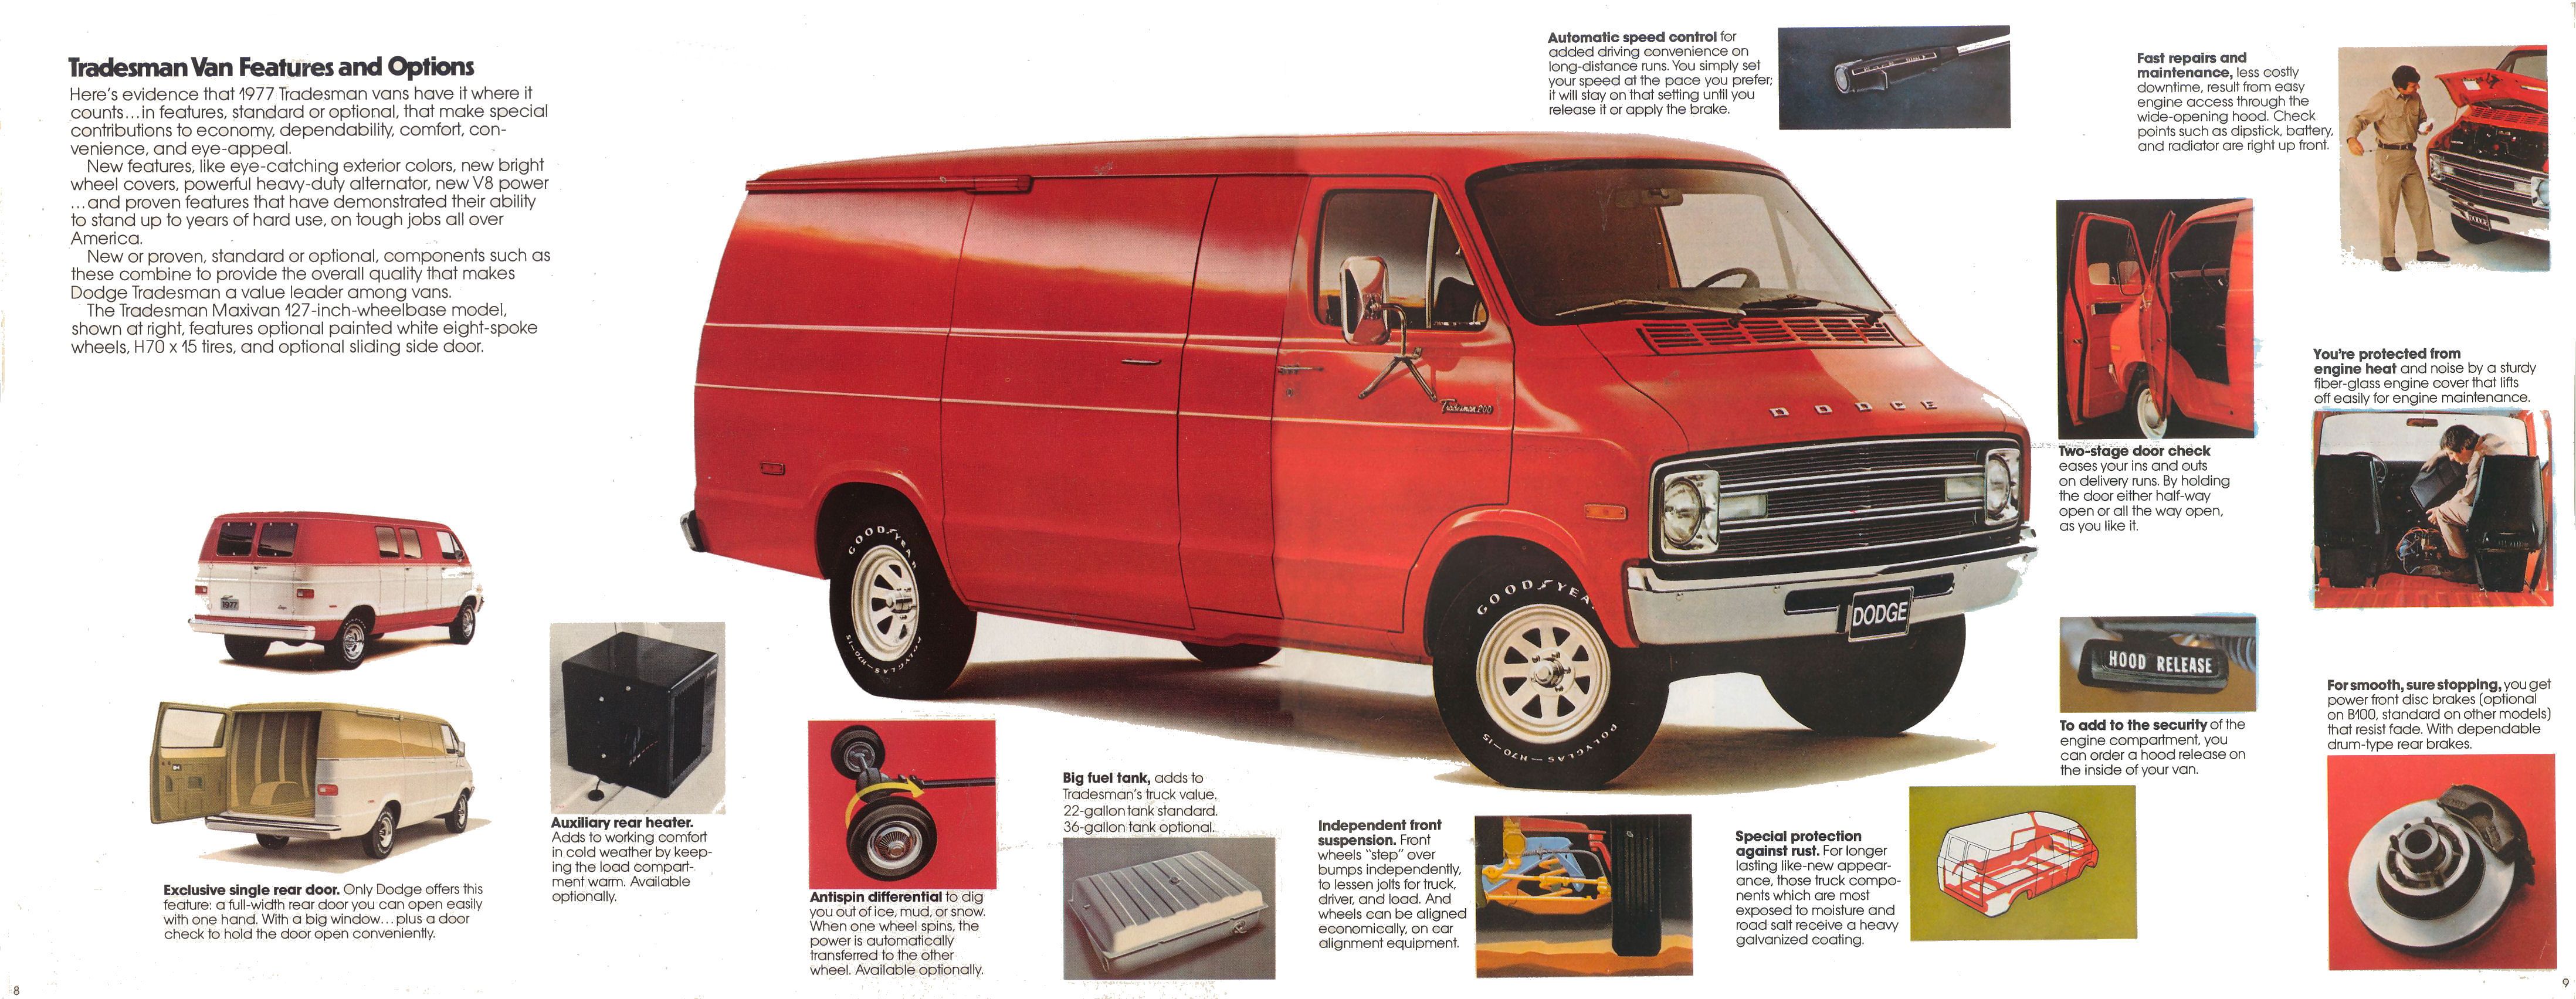 1977 Dodge Tradesman Vans-08-09